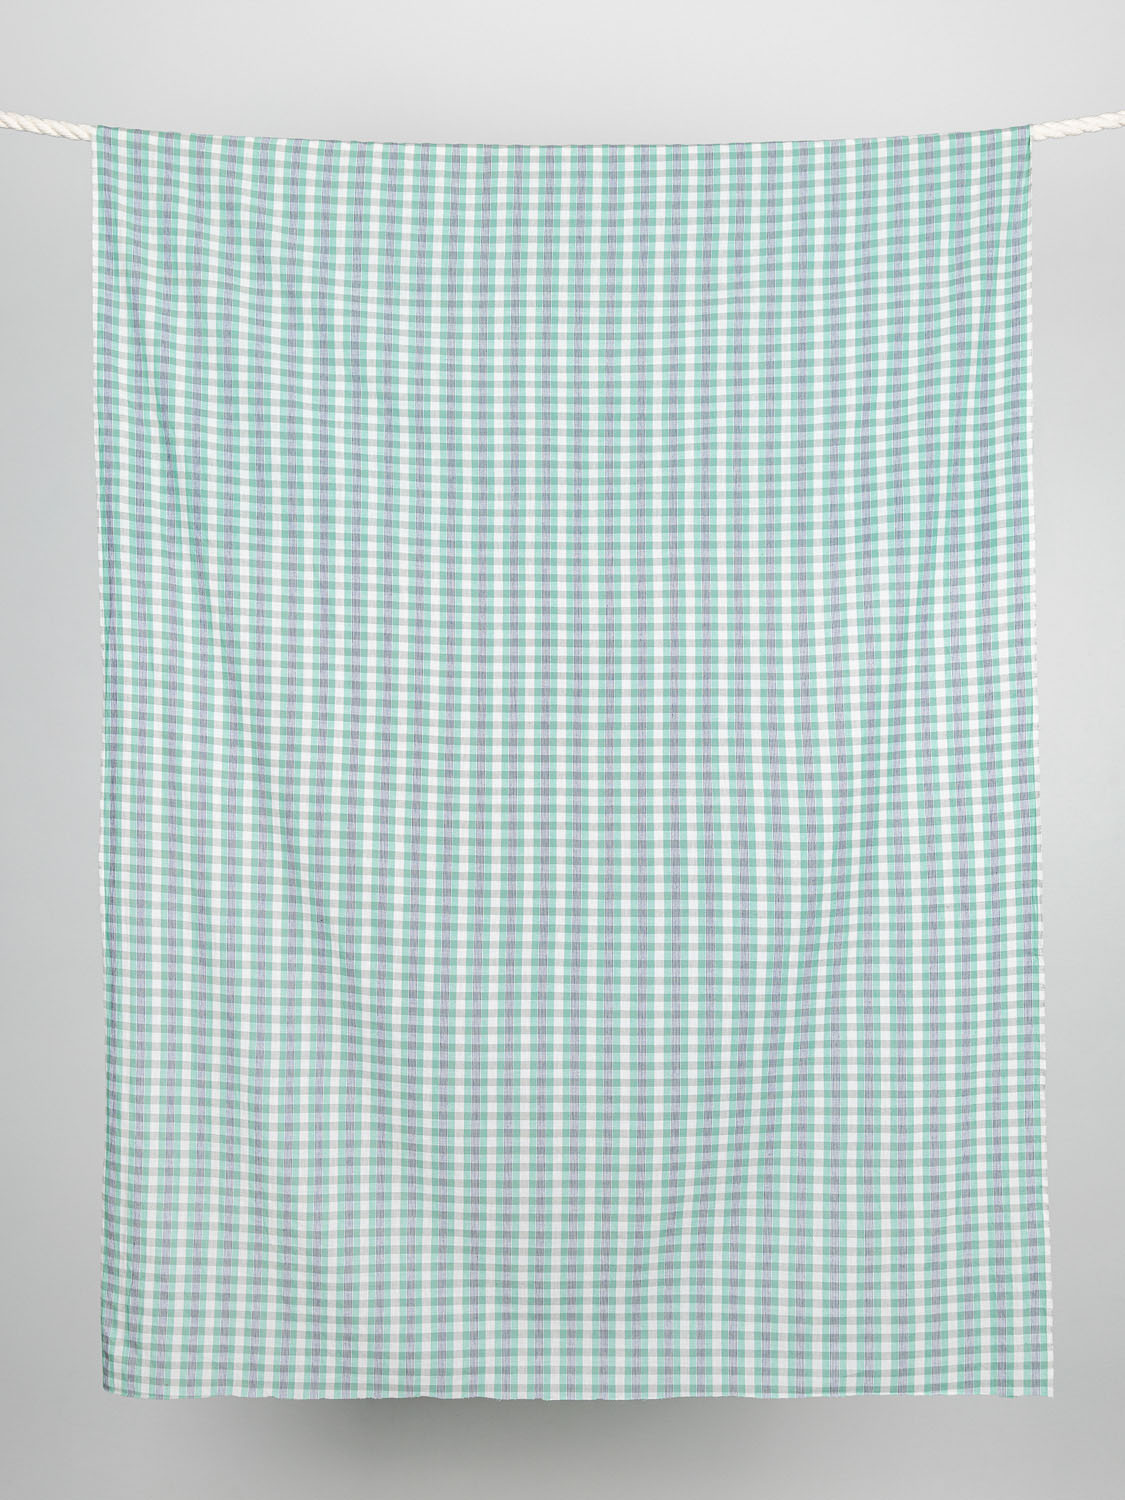 Yarn-Dyed Handspun Check + Stripe Khadi Cotton - Mint + Navy + Cream | Core Fabrics